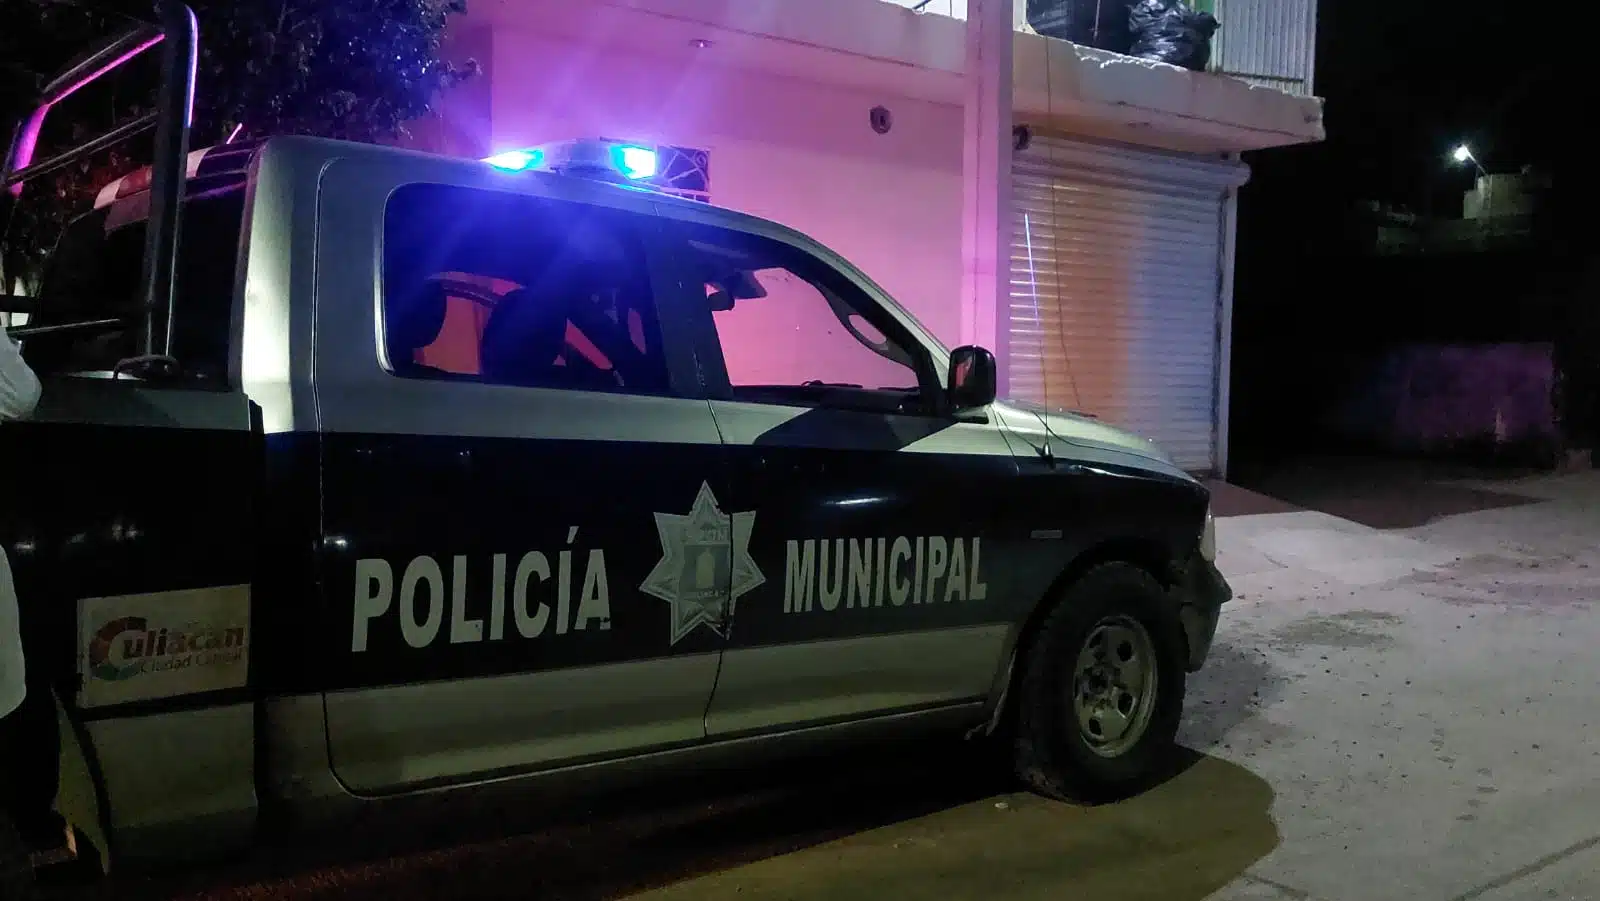 Patrulla policía municipal